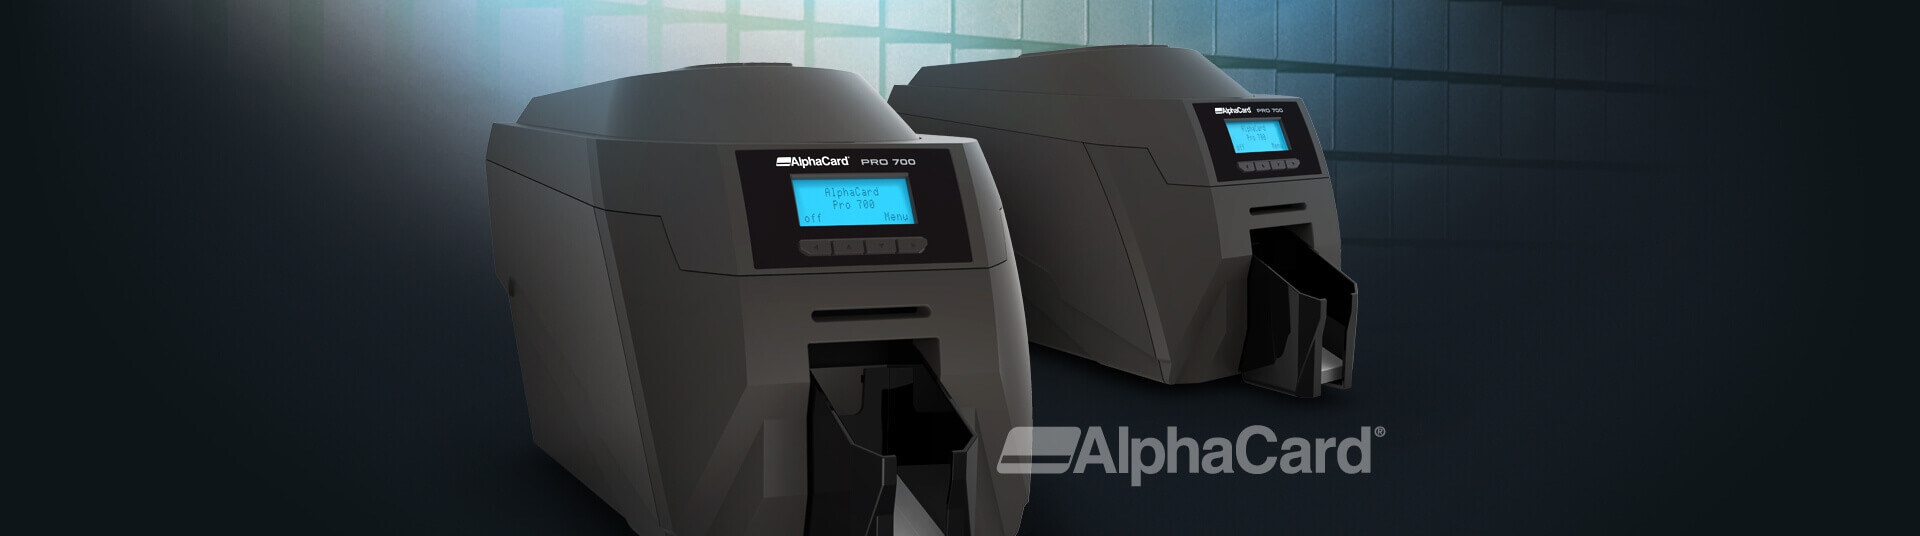 AlphaCard PRO 700 ID Card Printers